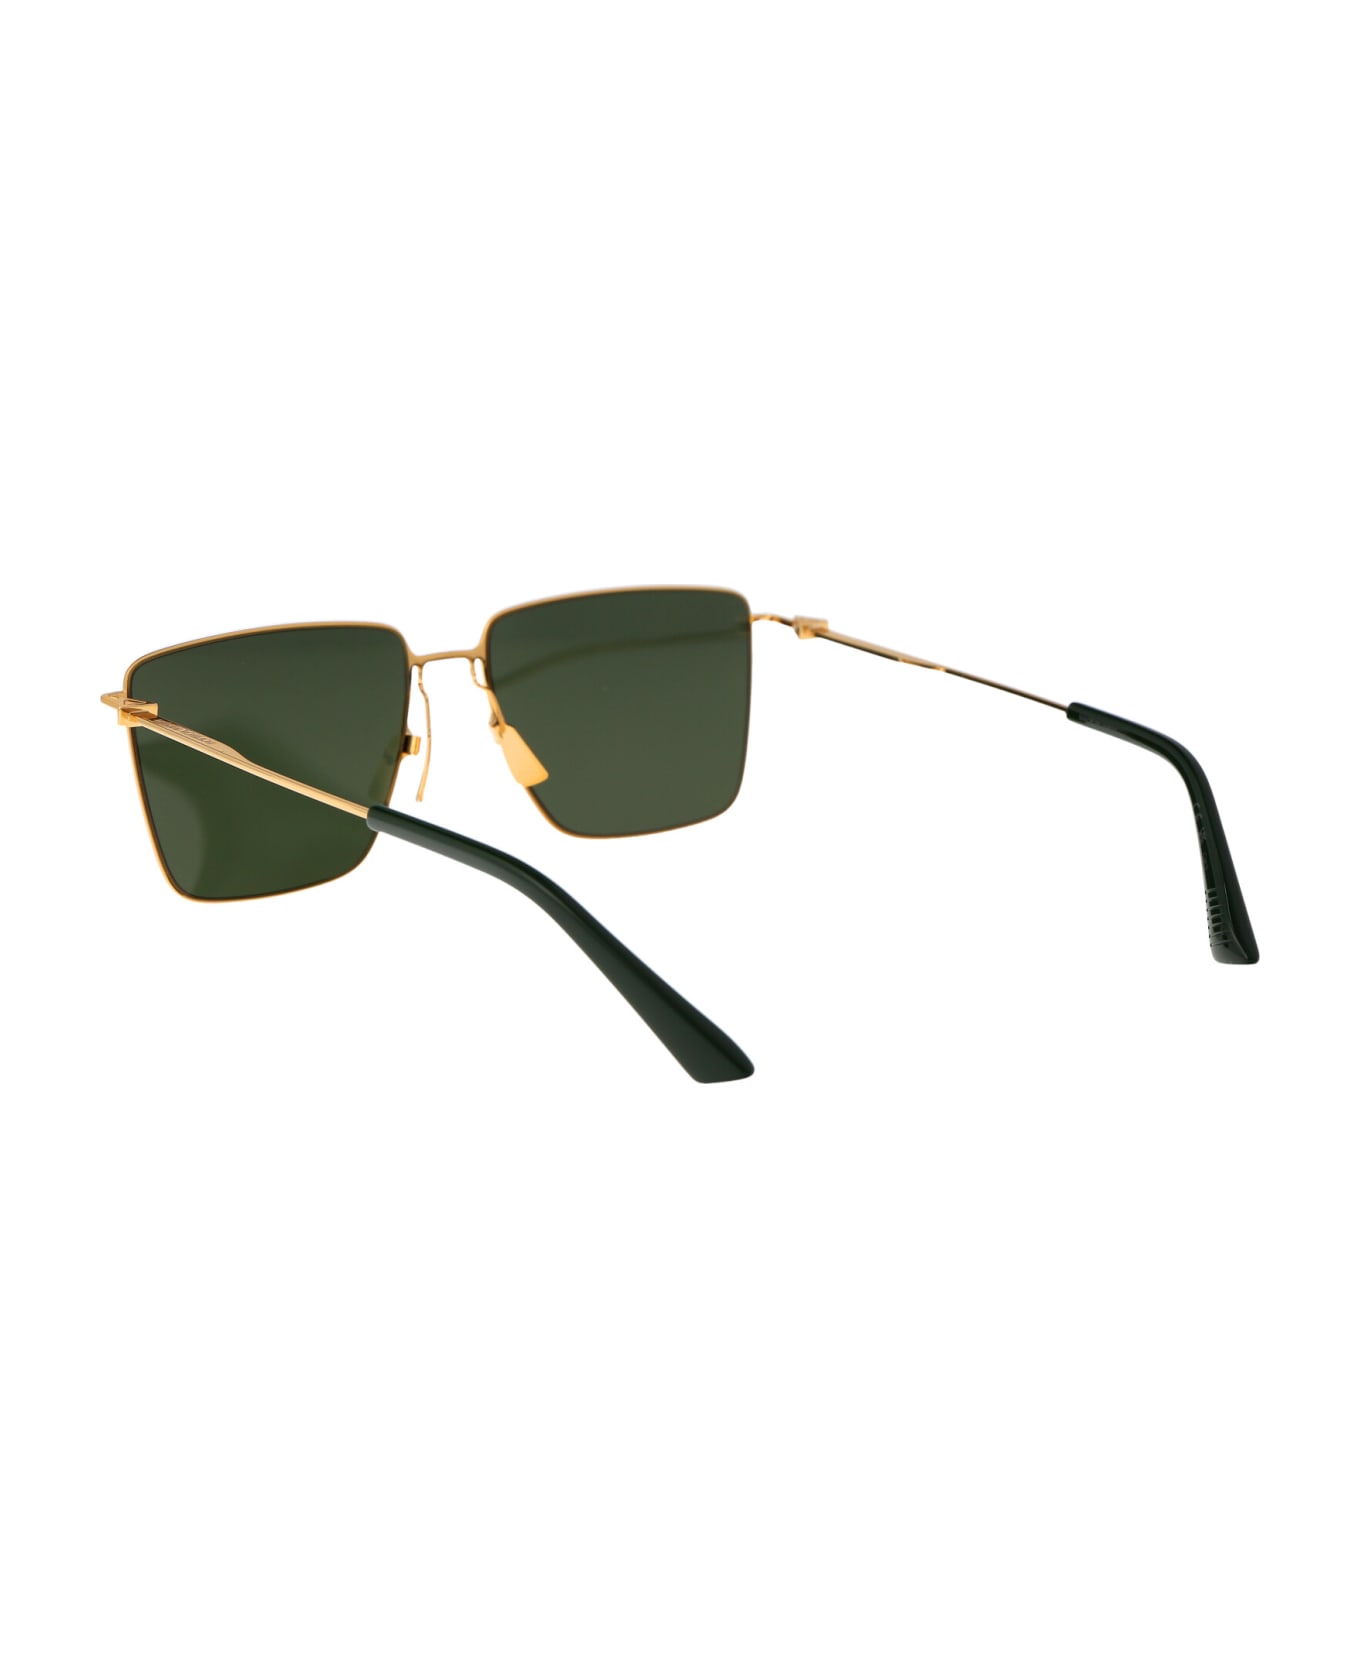 Bottega Veneta Eyewear Bv1267s Sunglasses - 004 GOLD GOLD GREEN